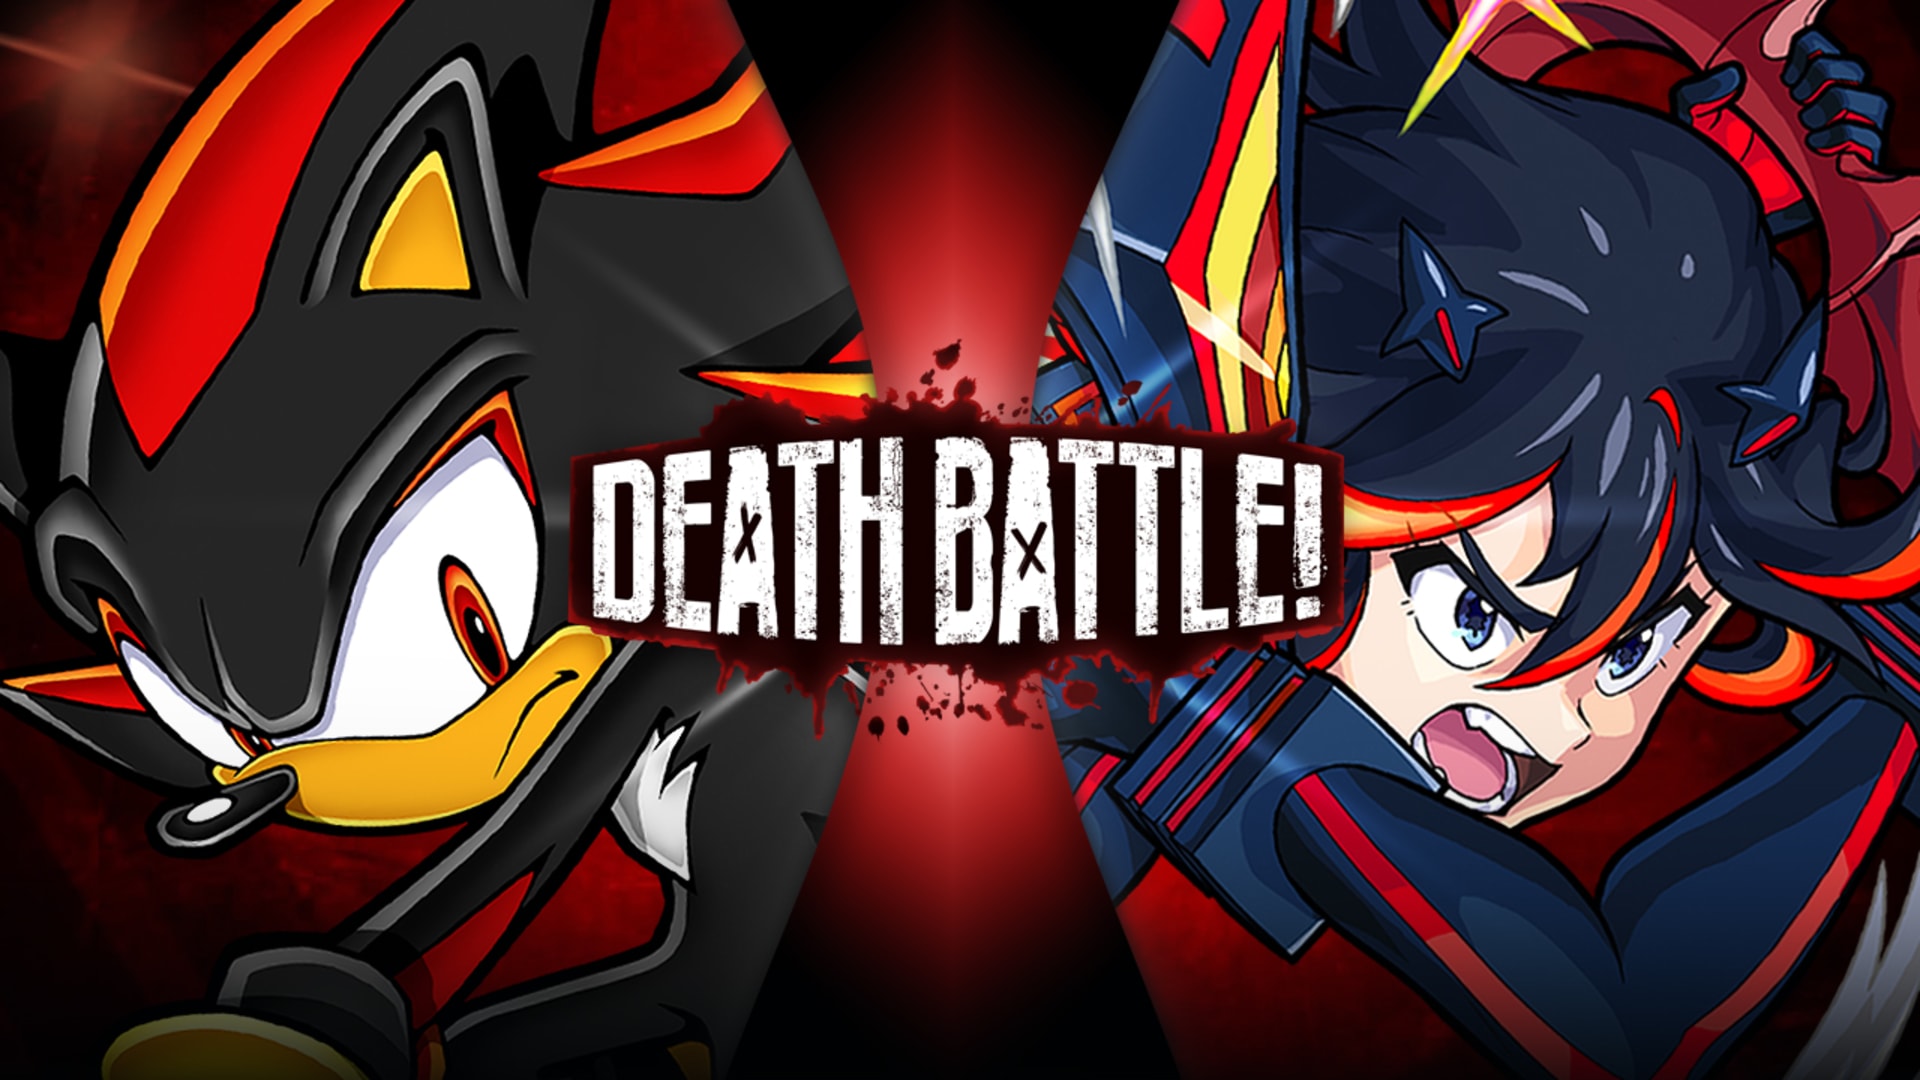 Venom vs Spawn  DEATH BATTLE Cast - Rooster Teeth